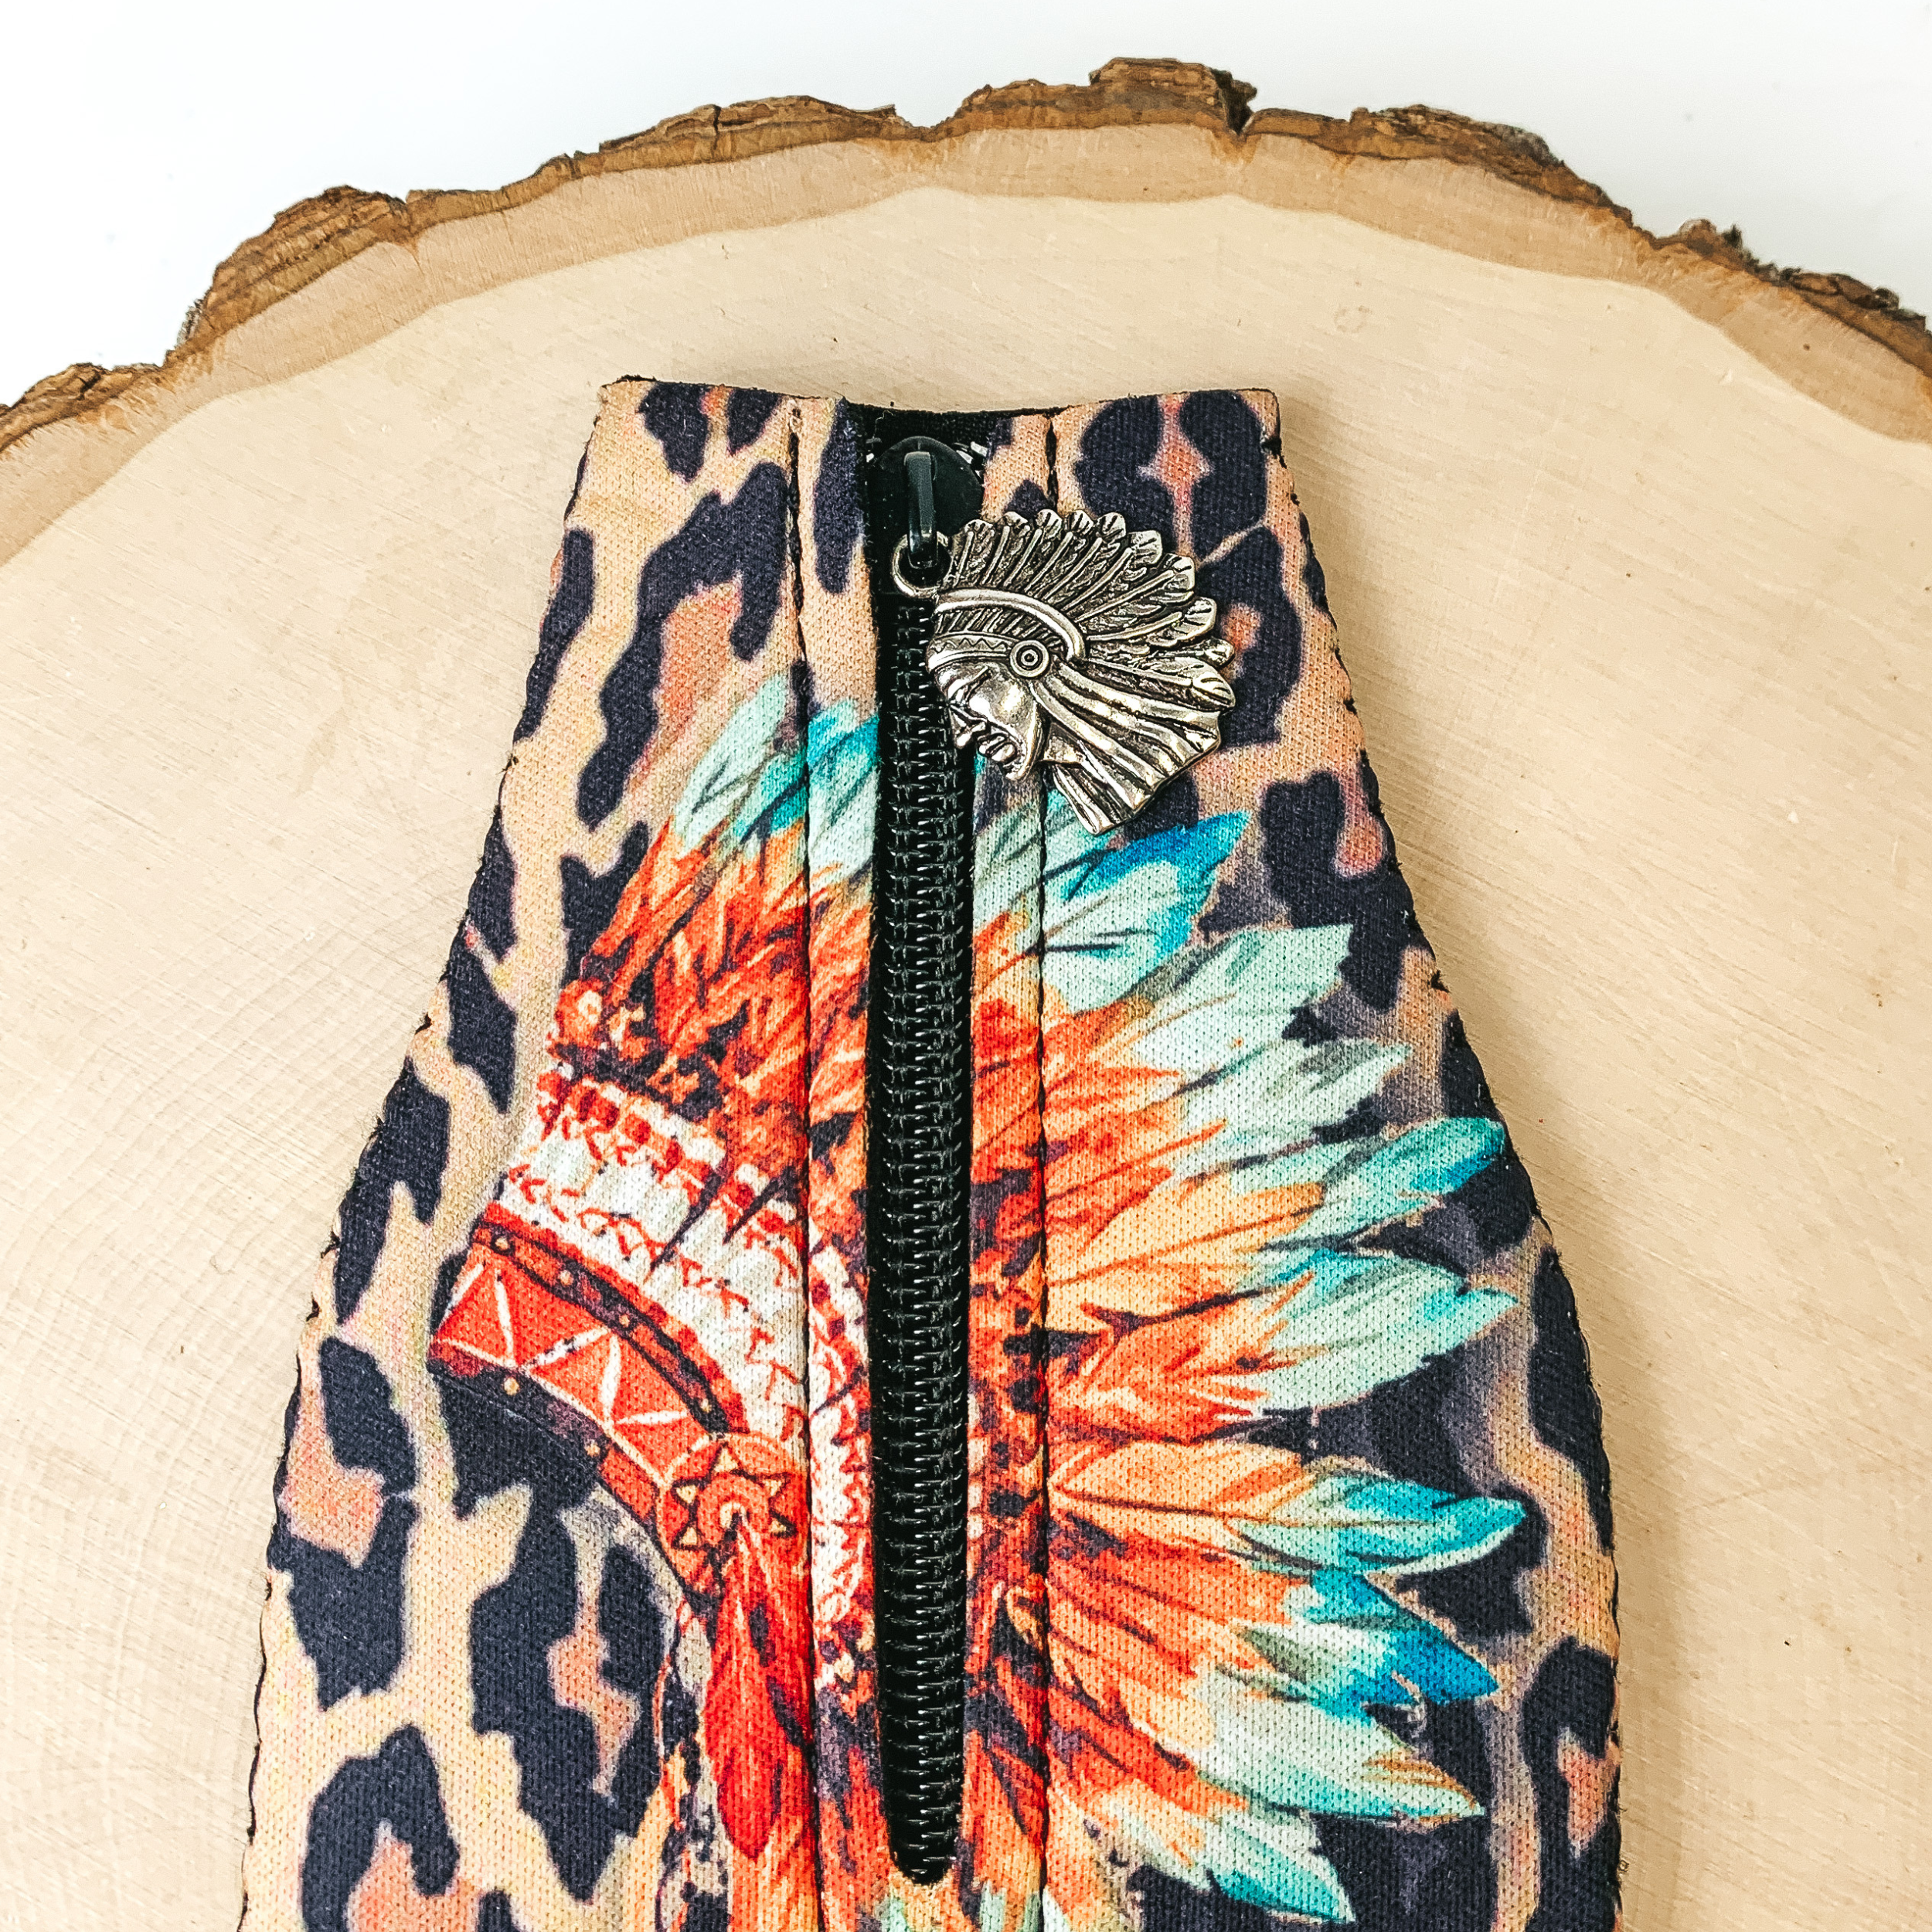 Native American and Leopard Print Zip Up Koozie with Native American Charm